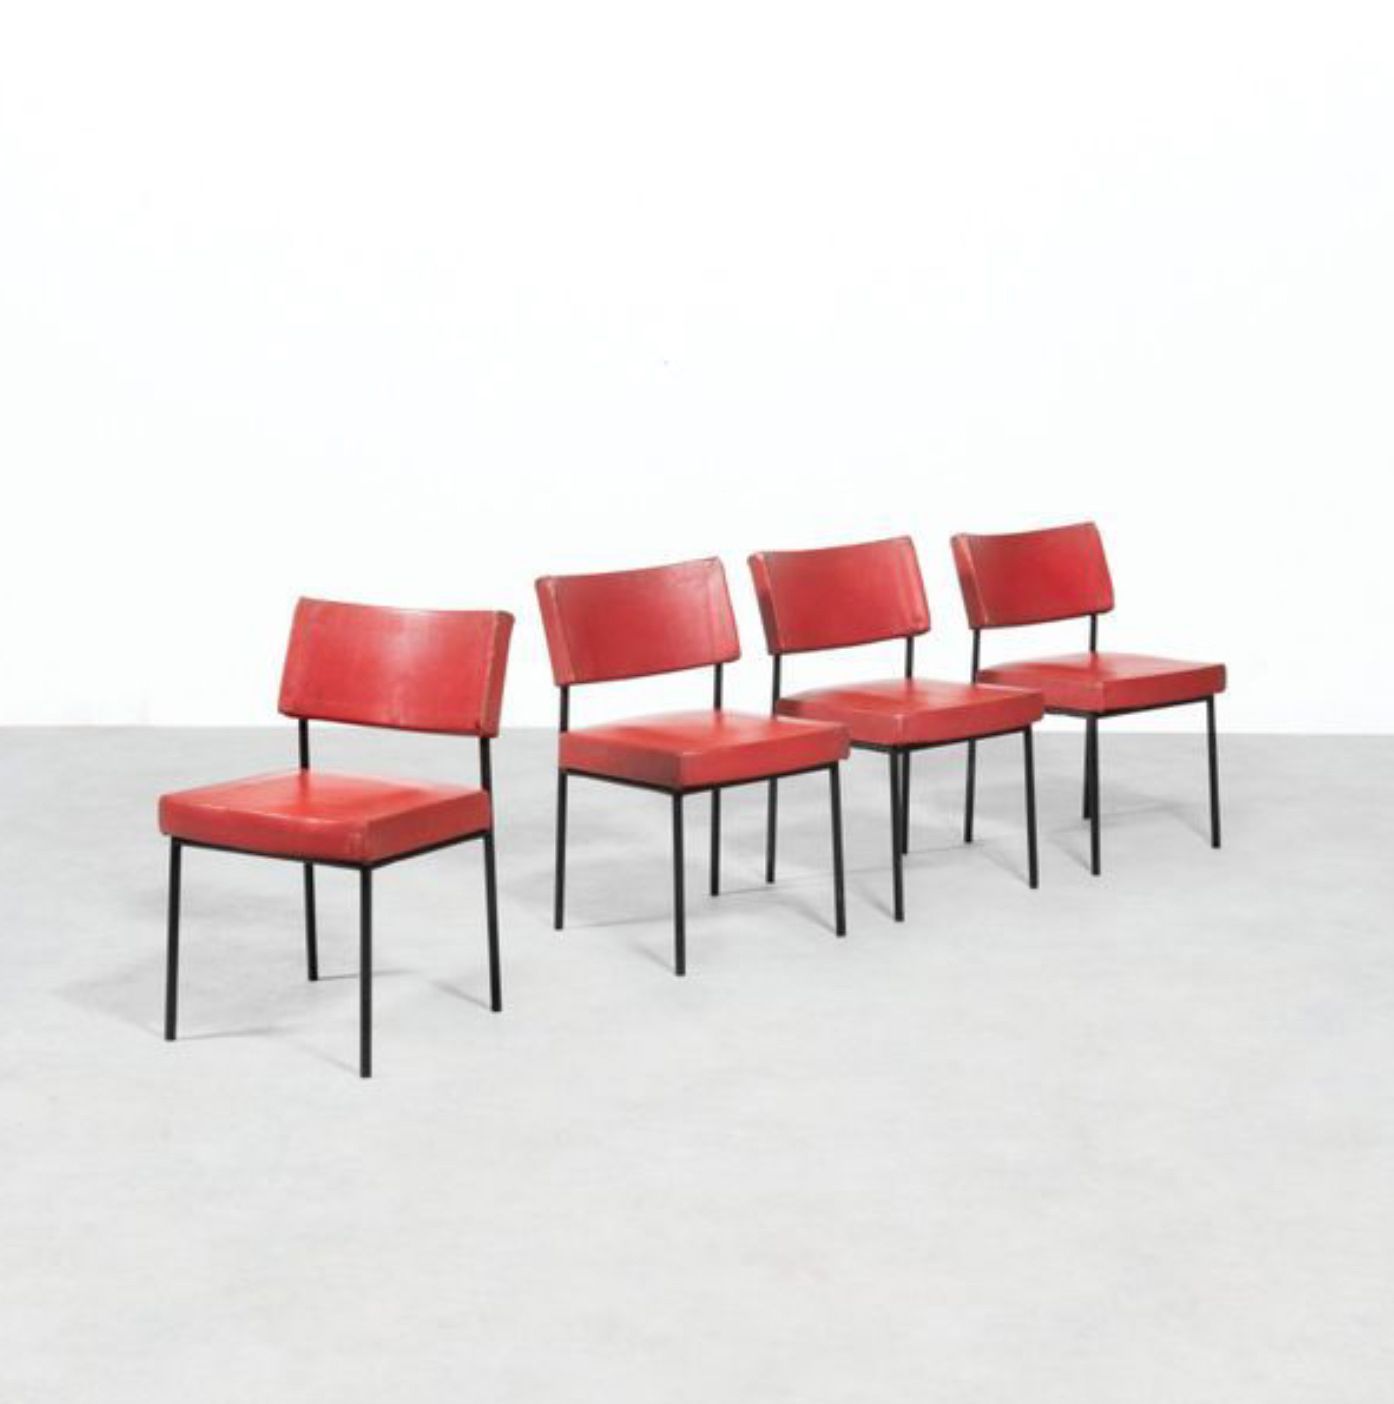 JOSEPH-ANDRÉ MOTTE (1925-2015) 四把椅子组成的套房，型号 "764 

黑色漆面金属和红色仿制品 

施泰纳版（出版商的板块）

&hellip;